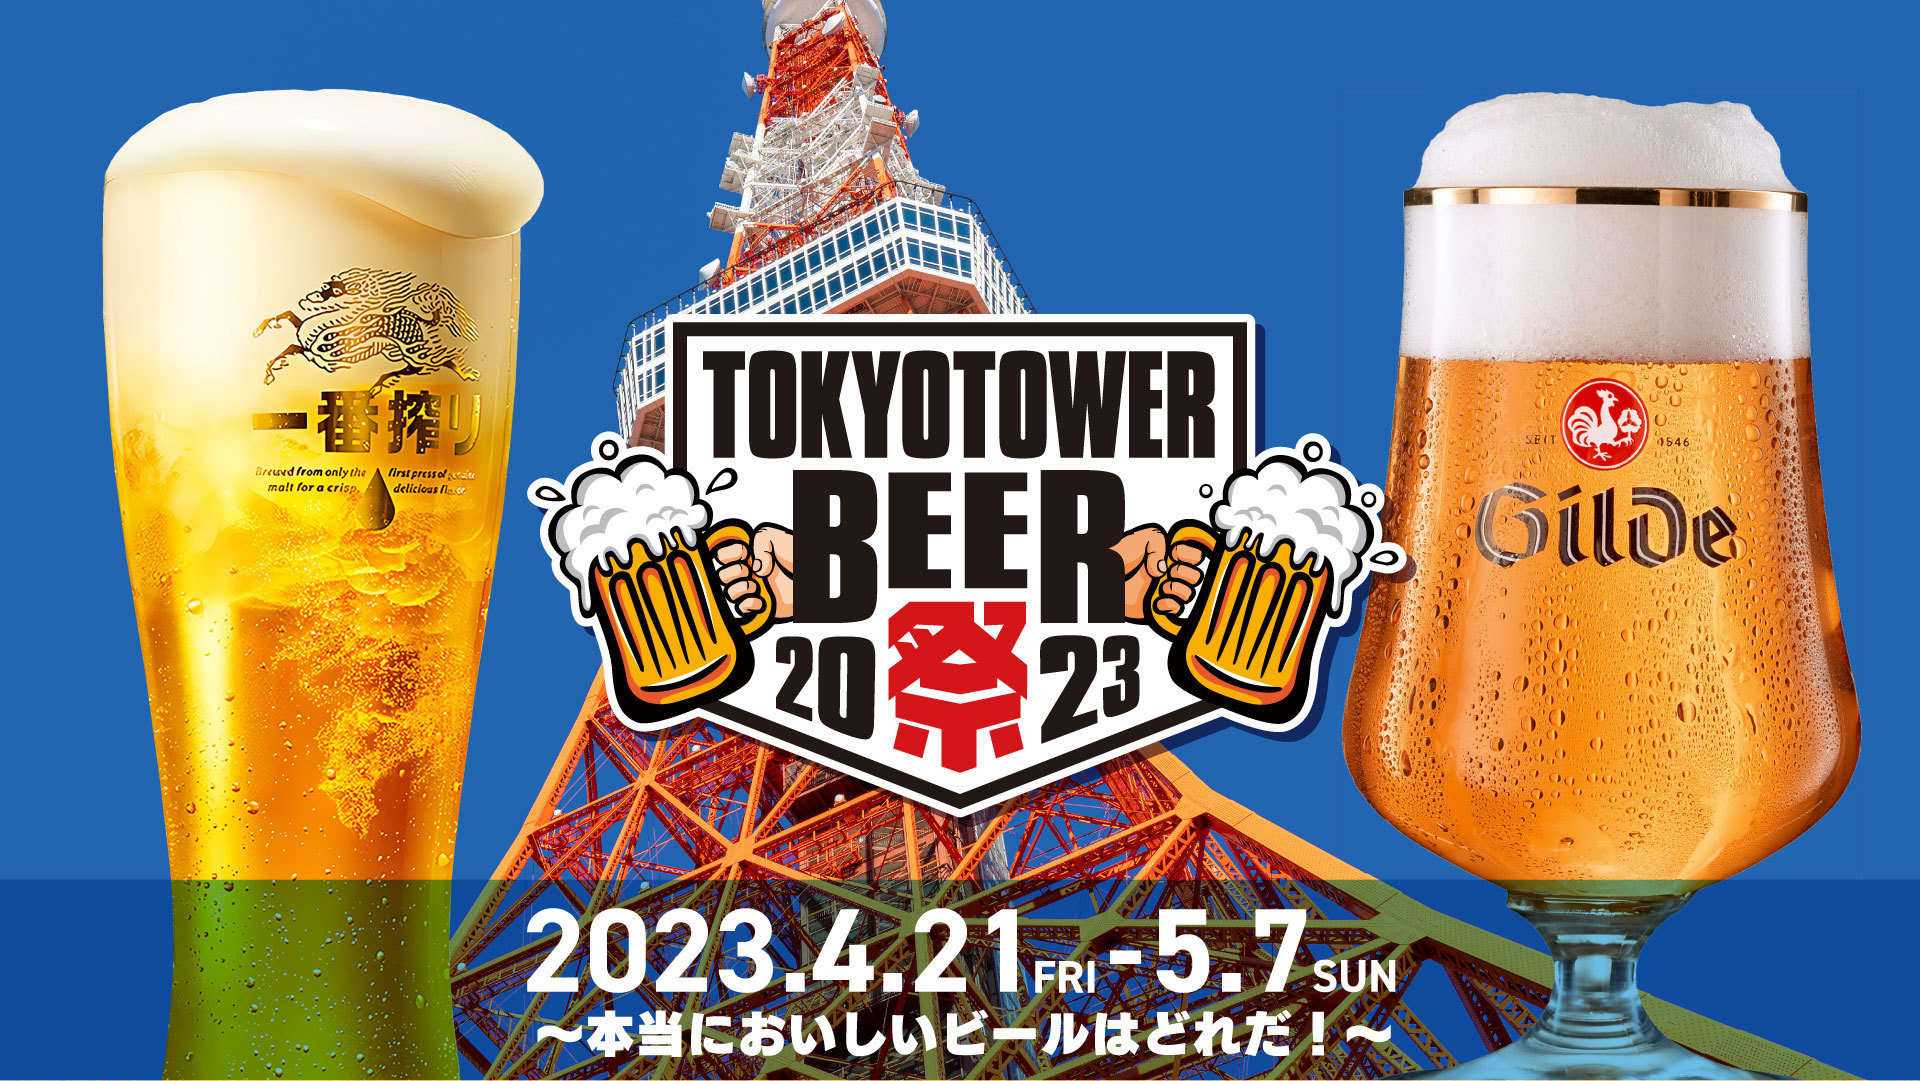 『TOKYO TOWER BEER祭 2023』
4月21日(金)～5月7日(日)開催！